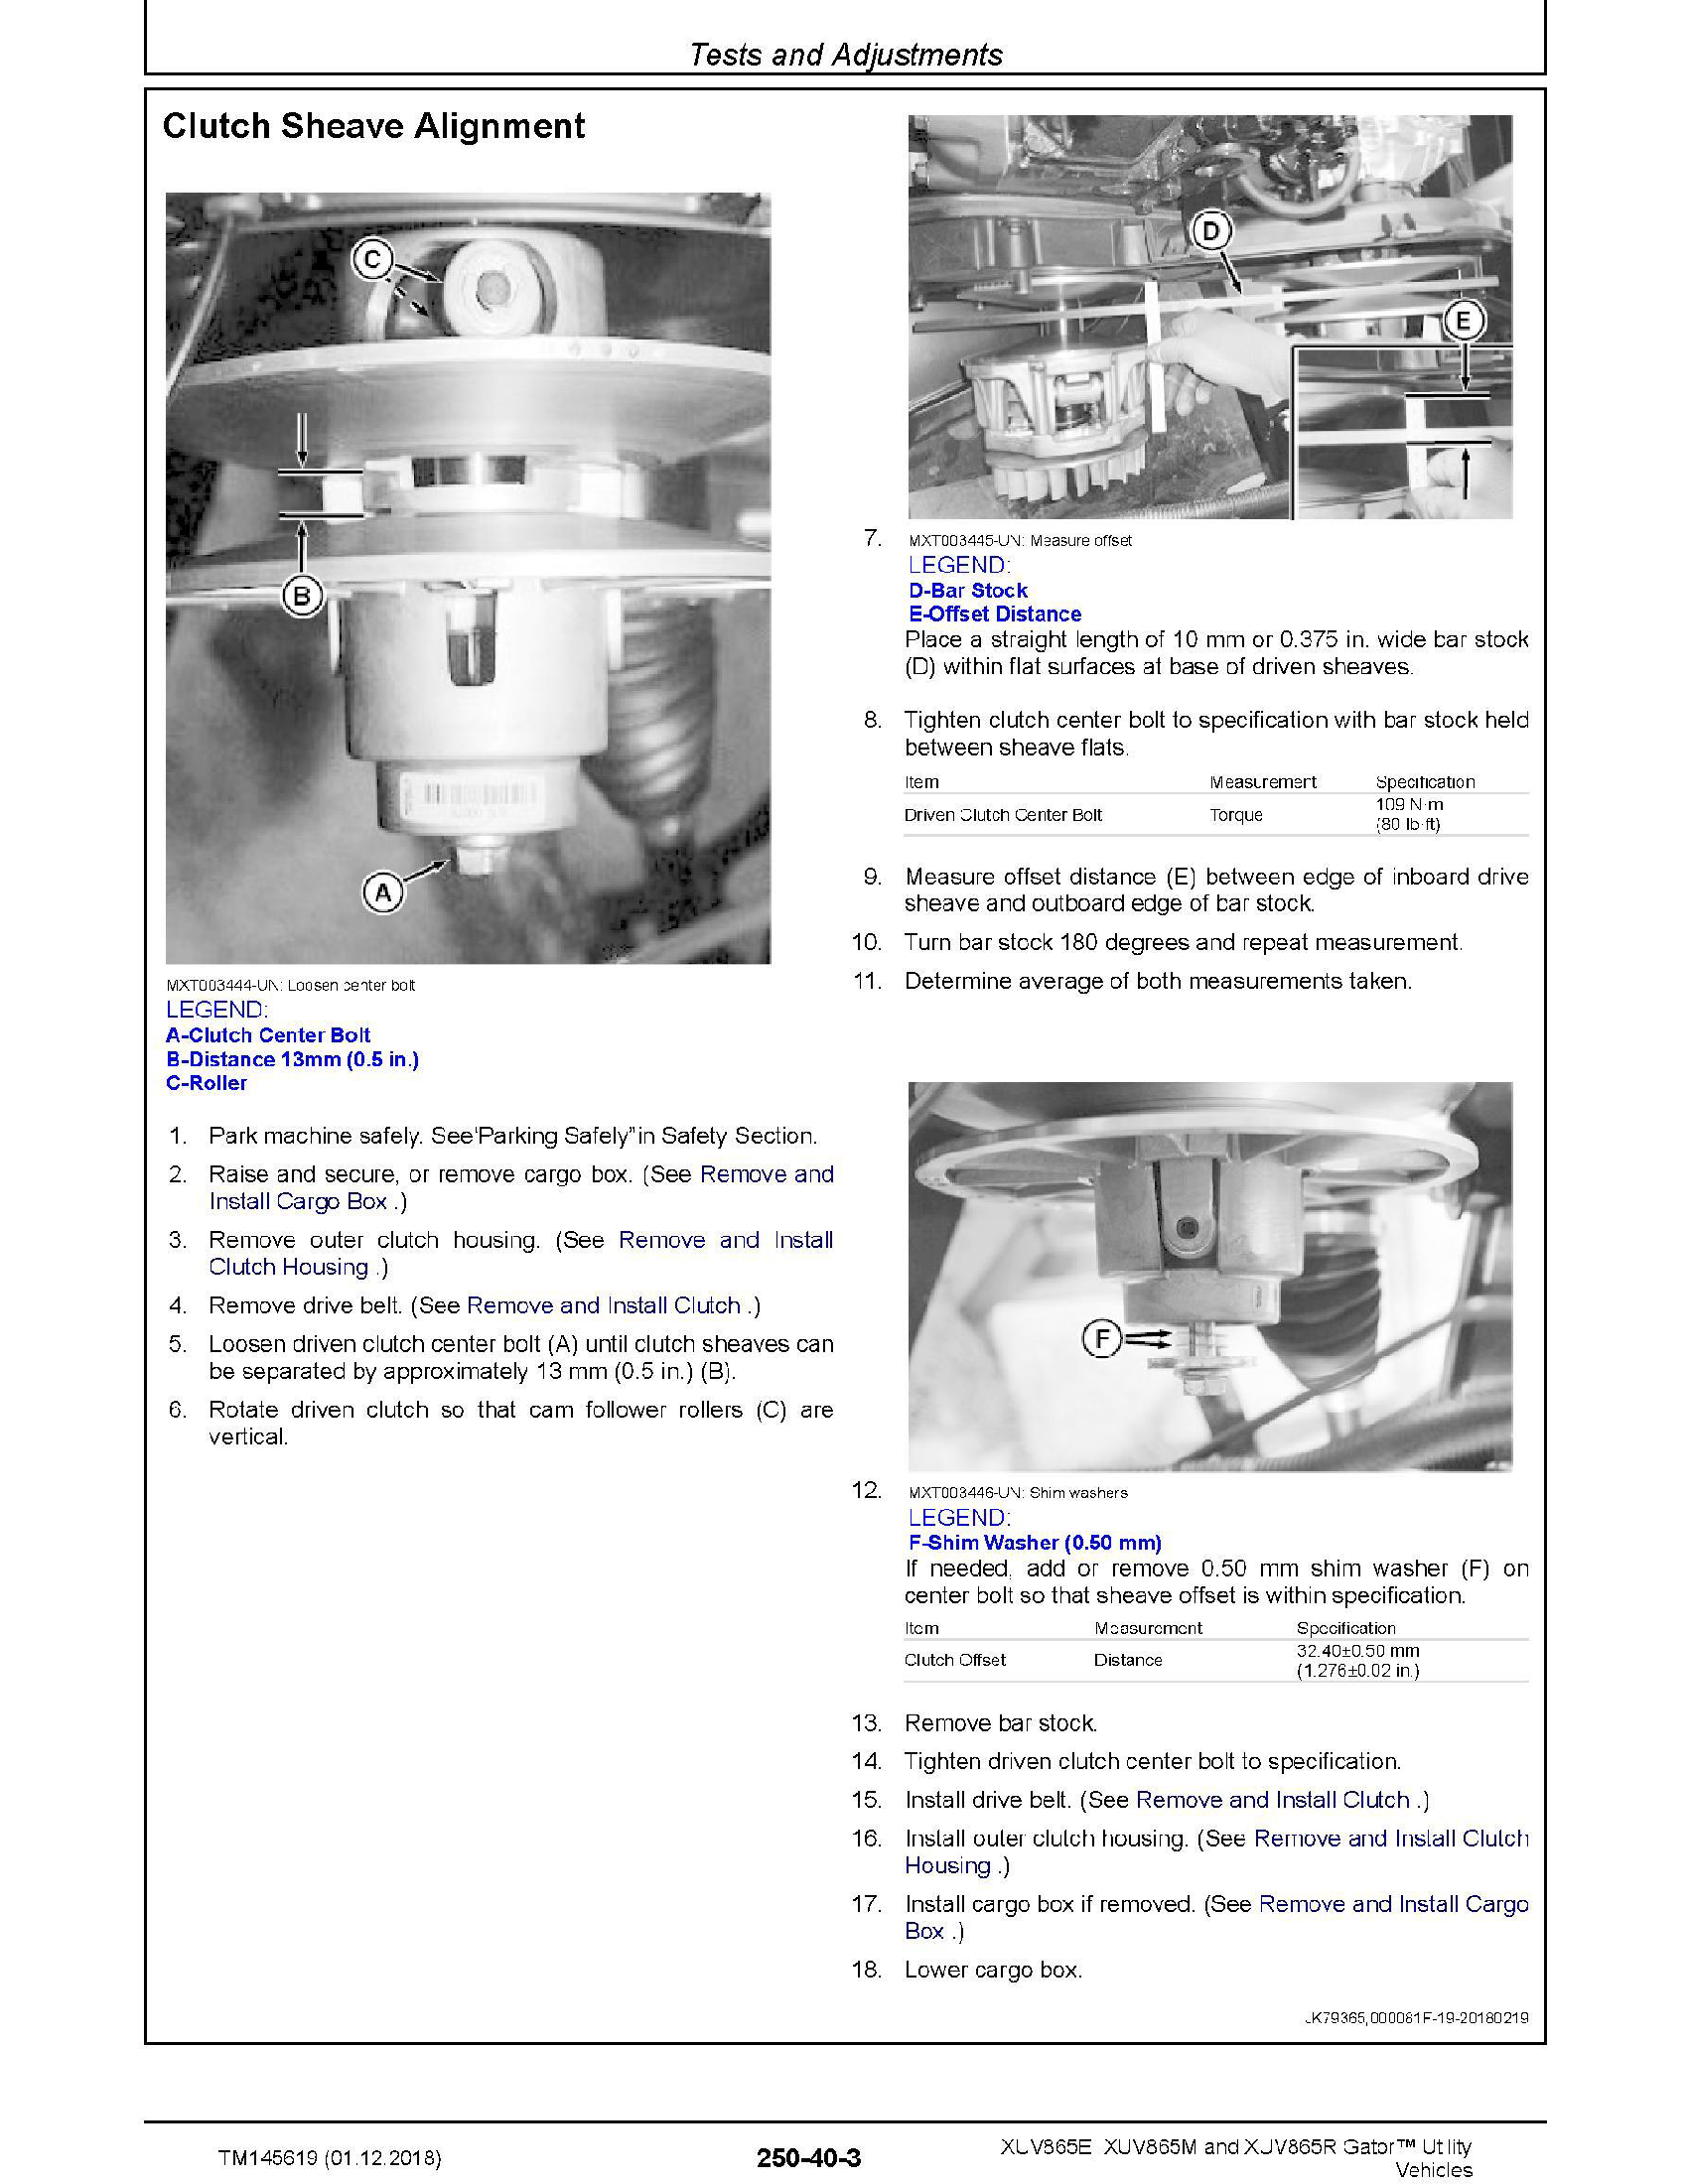 John Deere 9880i manual pdf